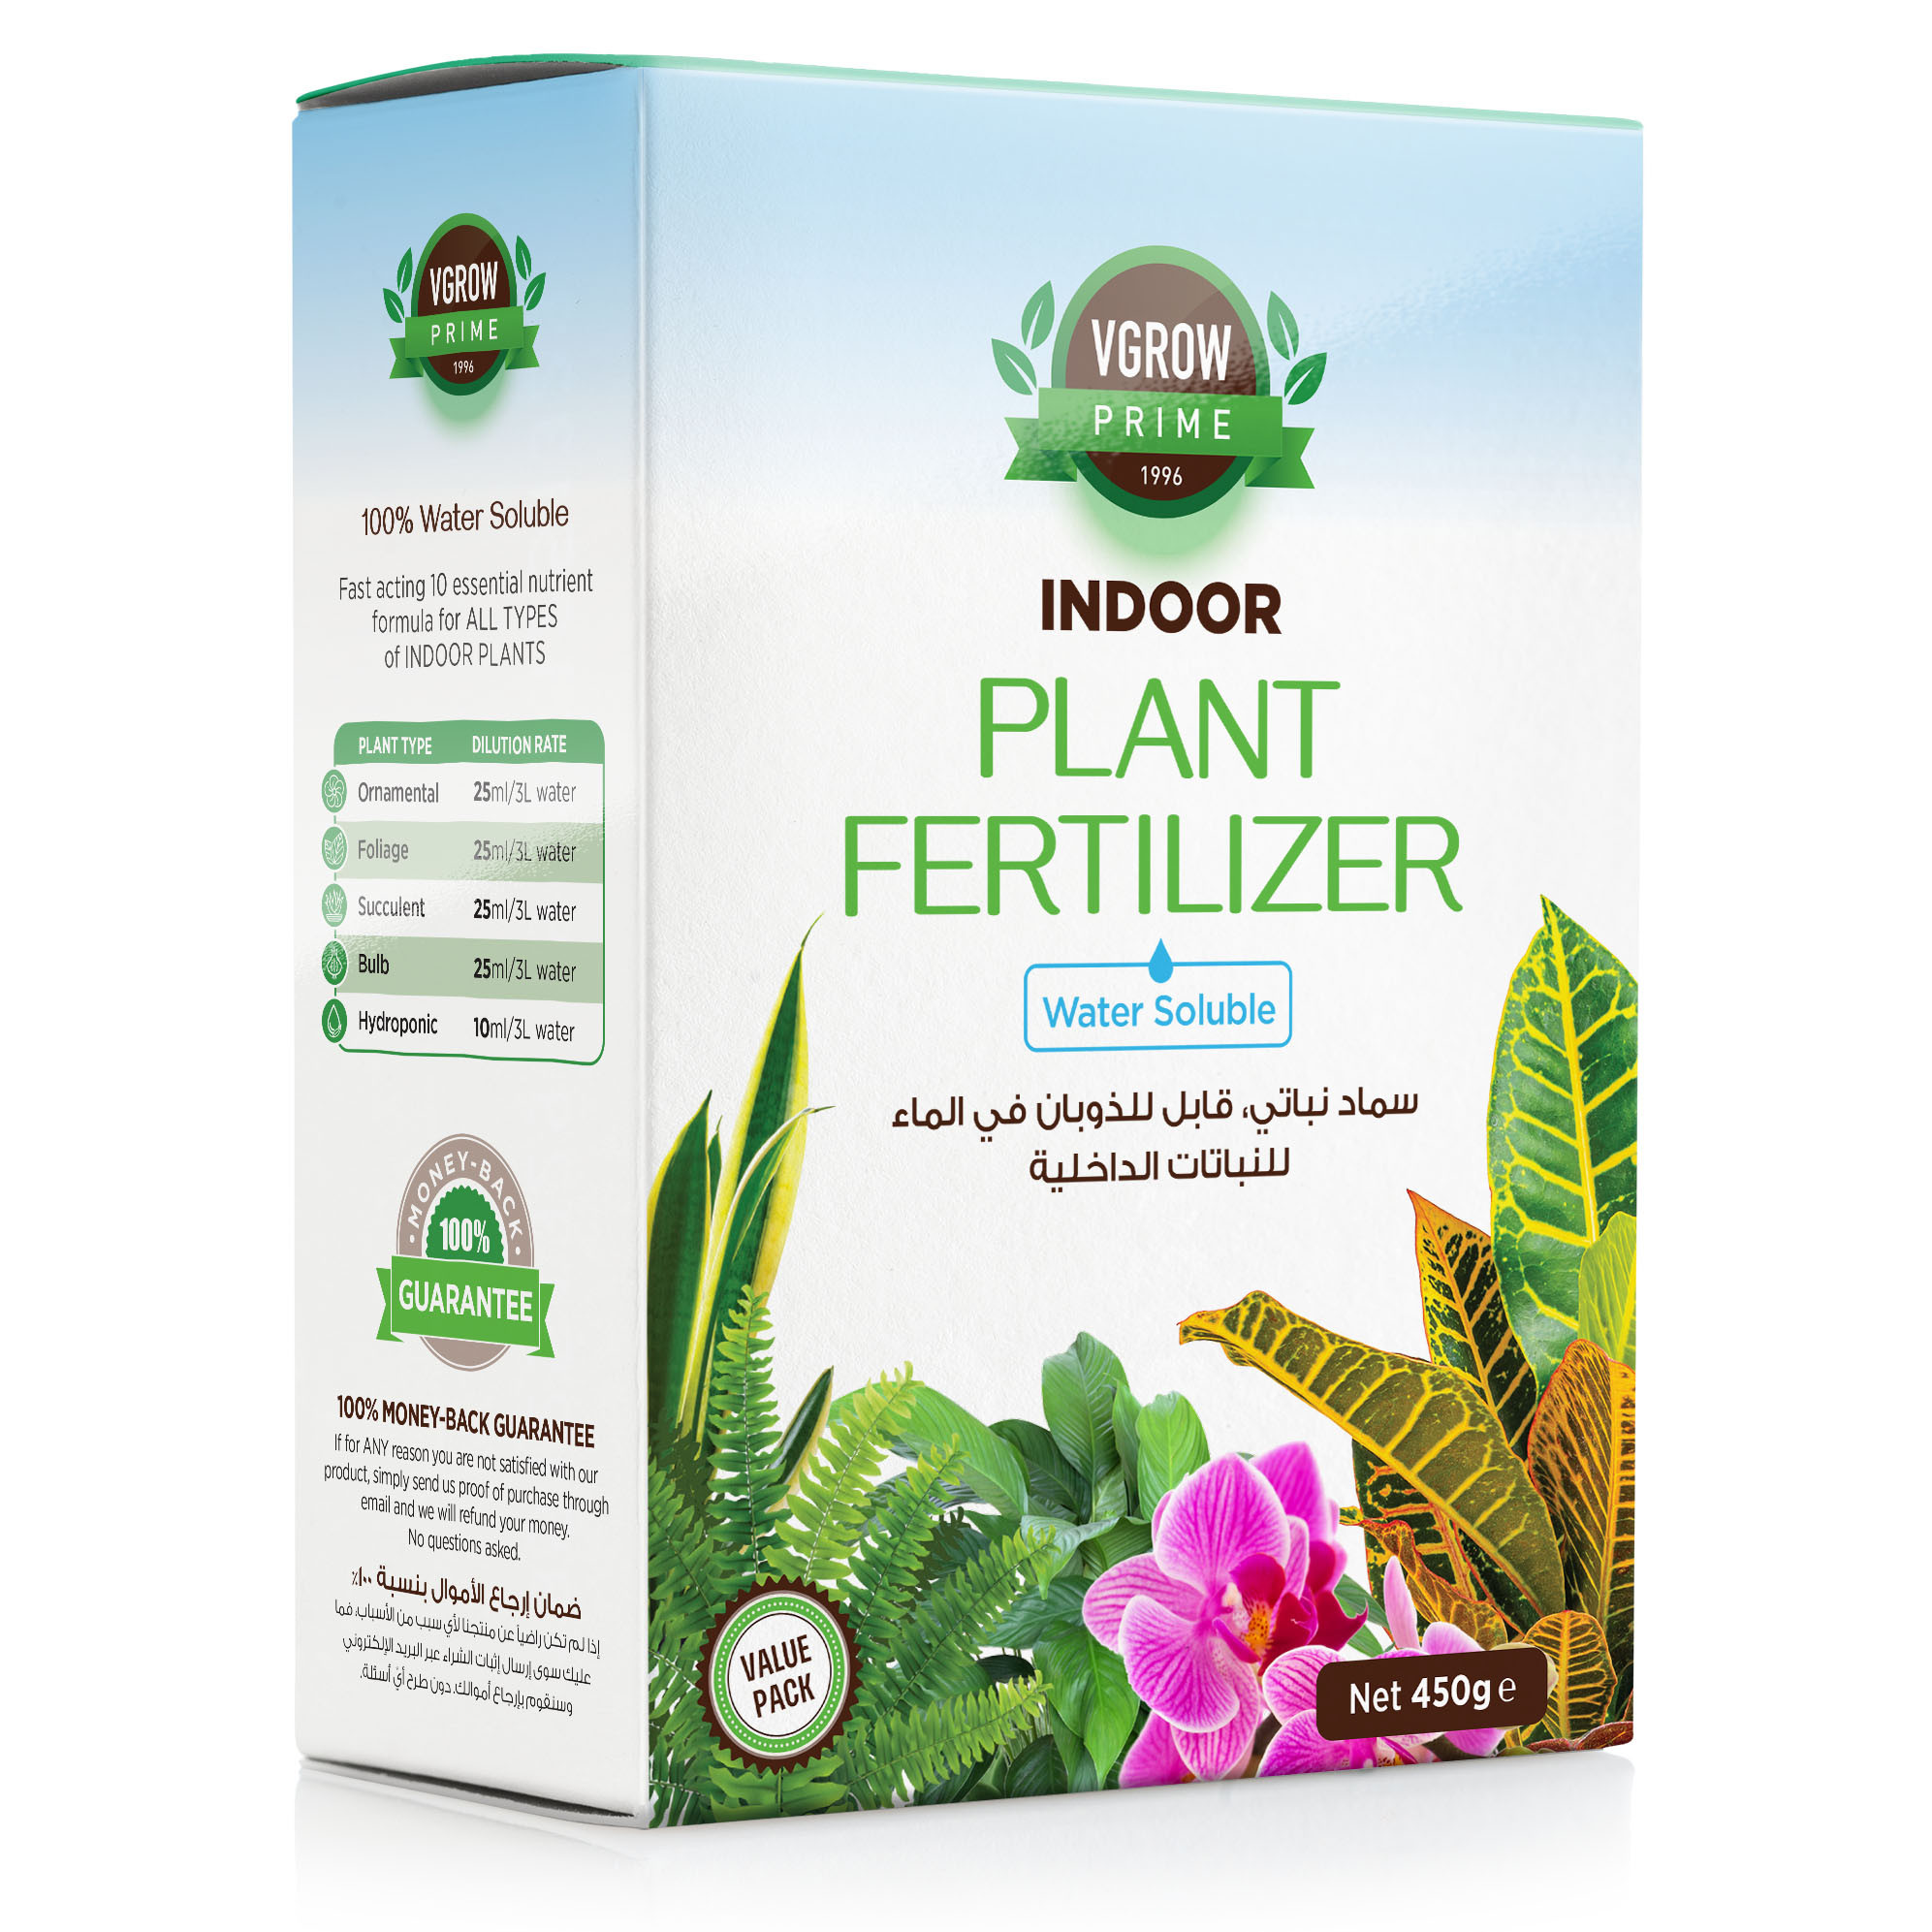 Vgrow Indoor Plant Fertilizer - 100% Water Soluble Essential Nutrients For Indoor Plants - 450g